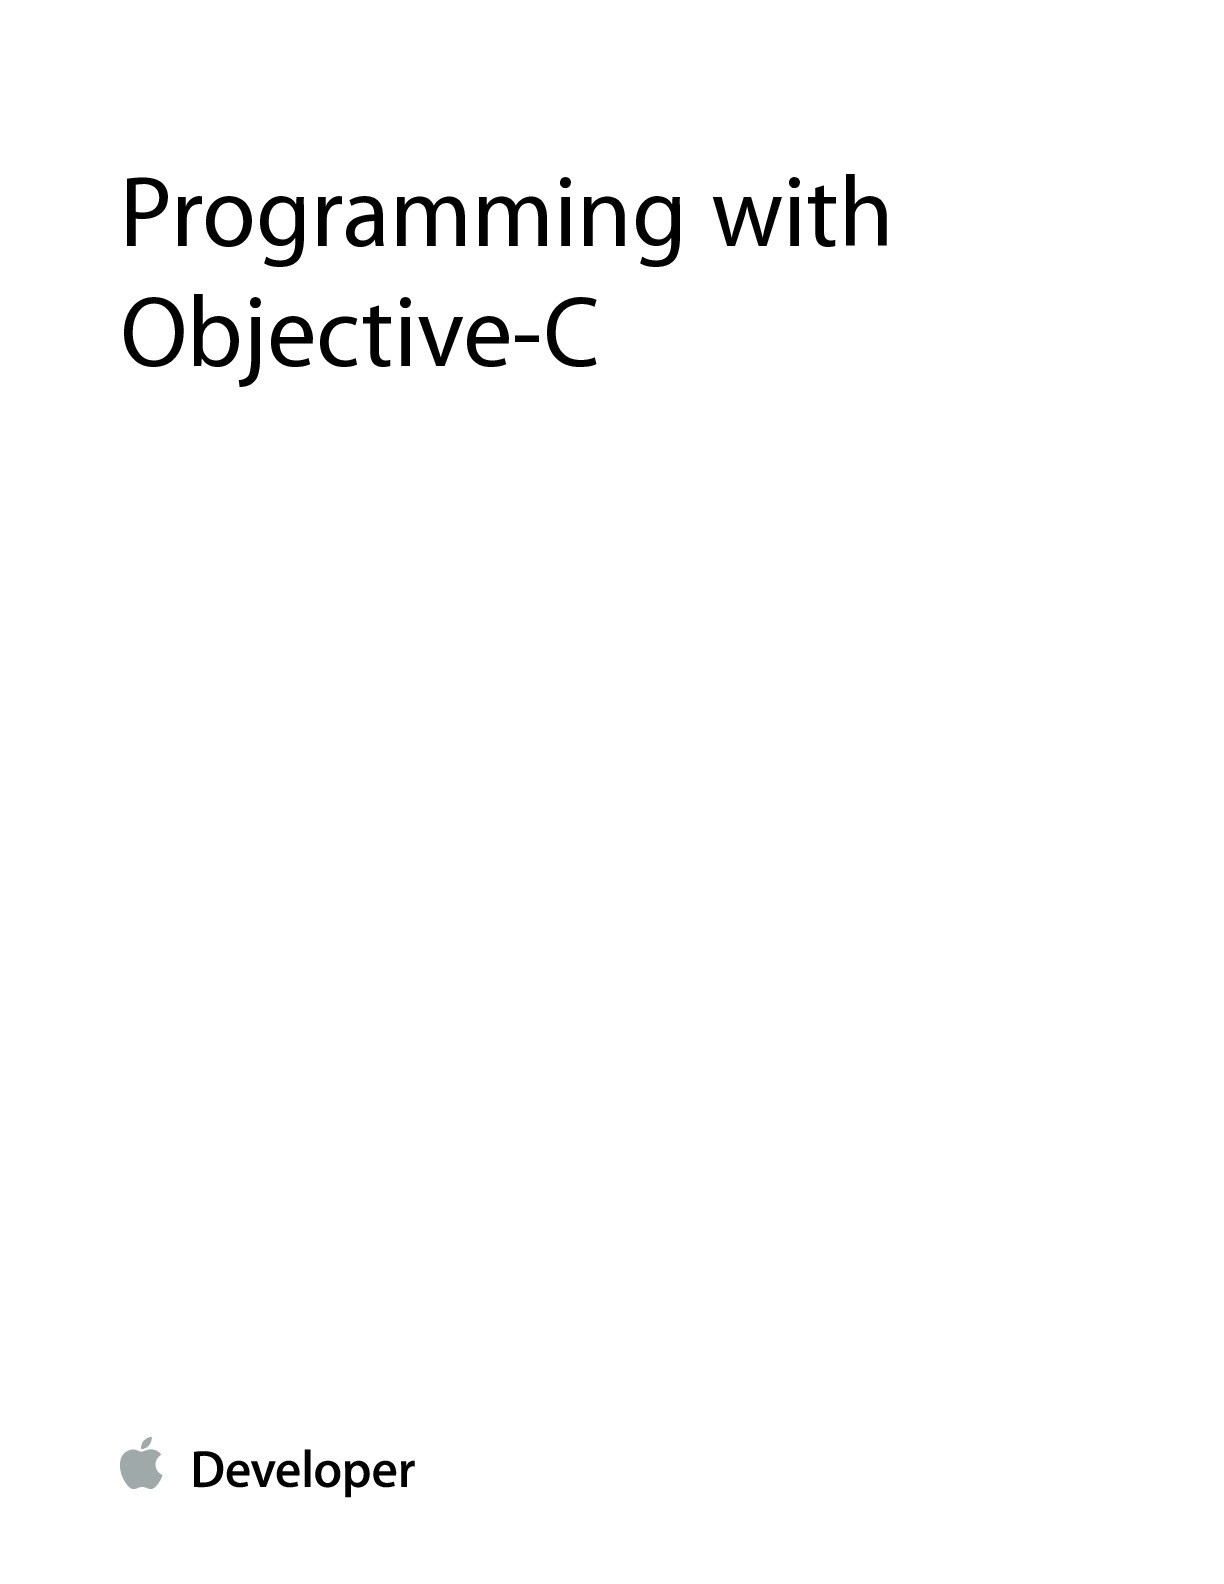 ProgrammingWithObjectiveC